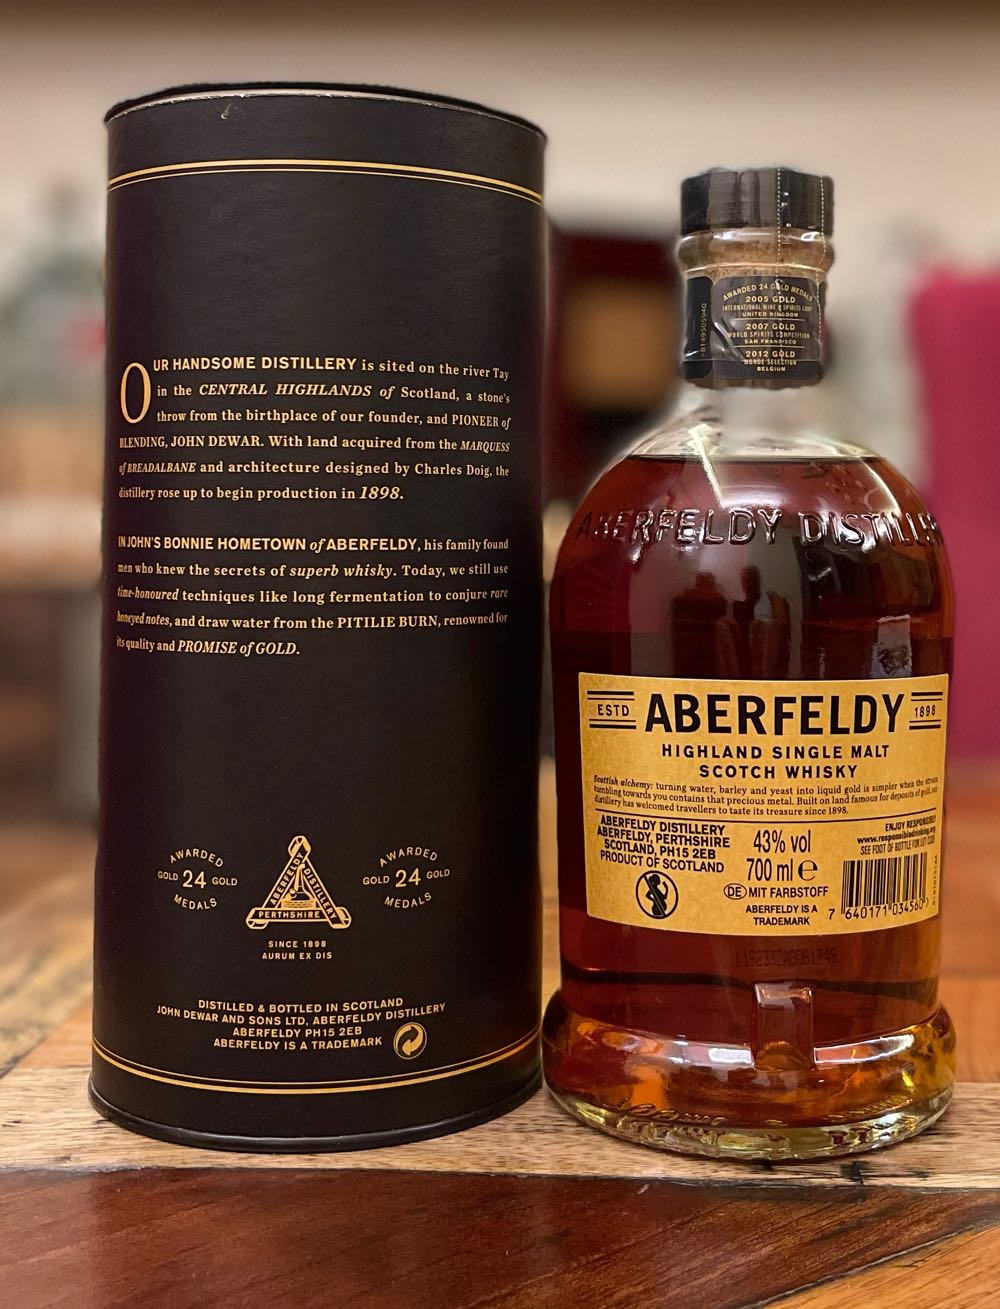 ABERFELDY 19y Dubai Exclusive Traveller Highland Single Malt Scotch Whisky - John Dewar & Sons Distillery (700 mL) alcohol collectible [Barcode 7640171034560] - Main Image 2